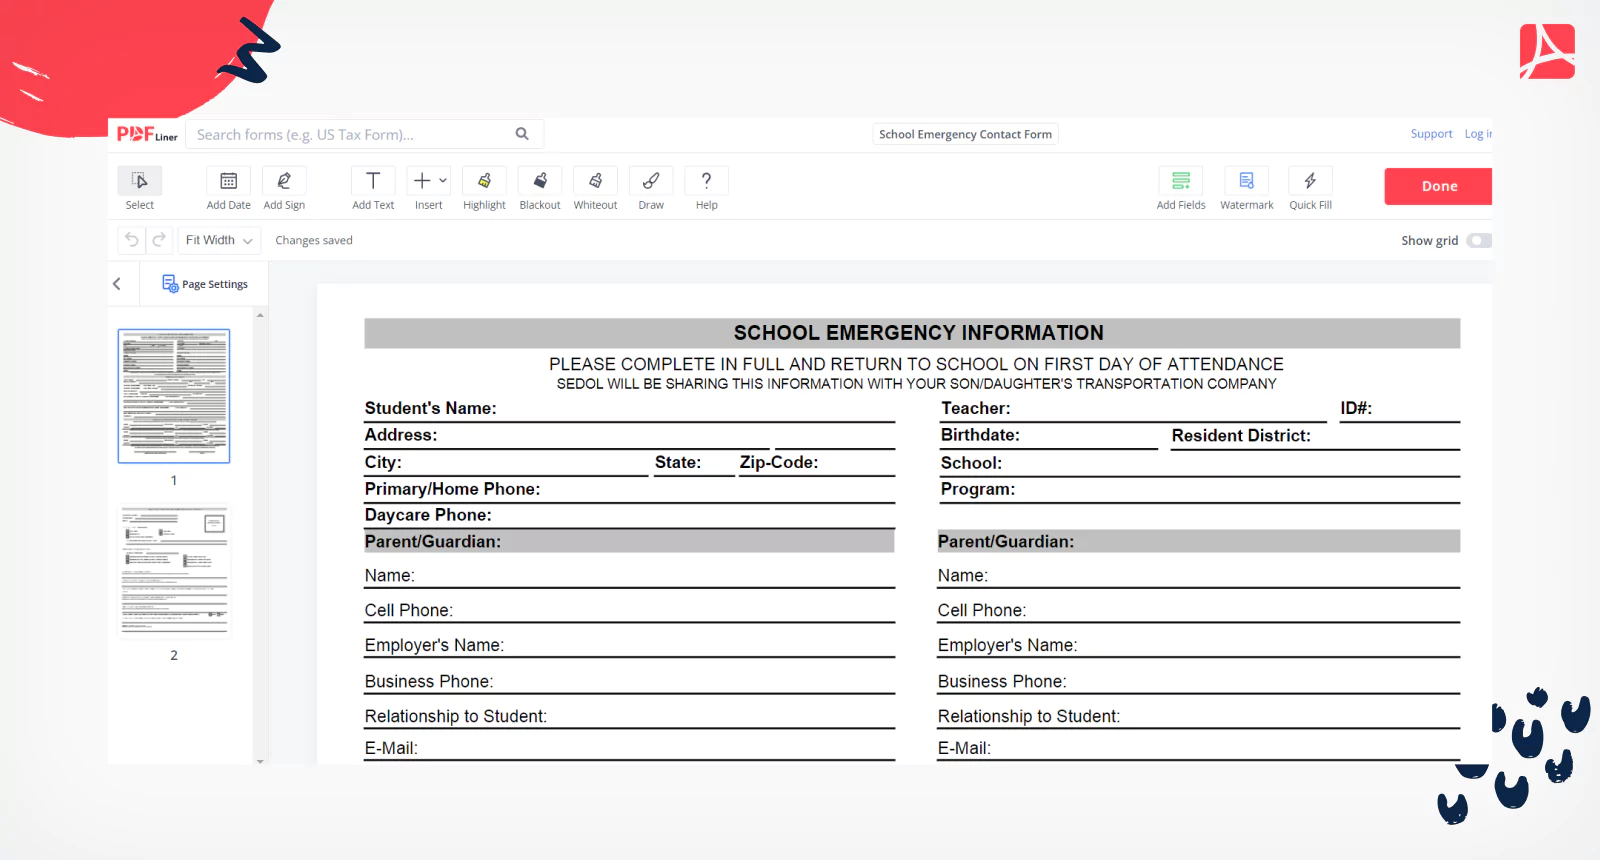 School Emergency Contact Form on PDFLiner